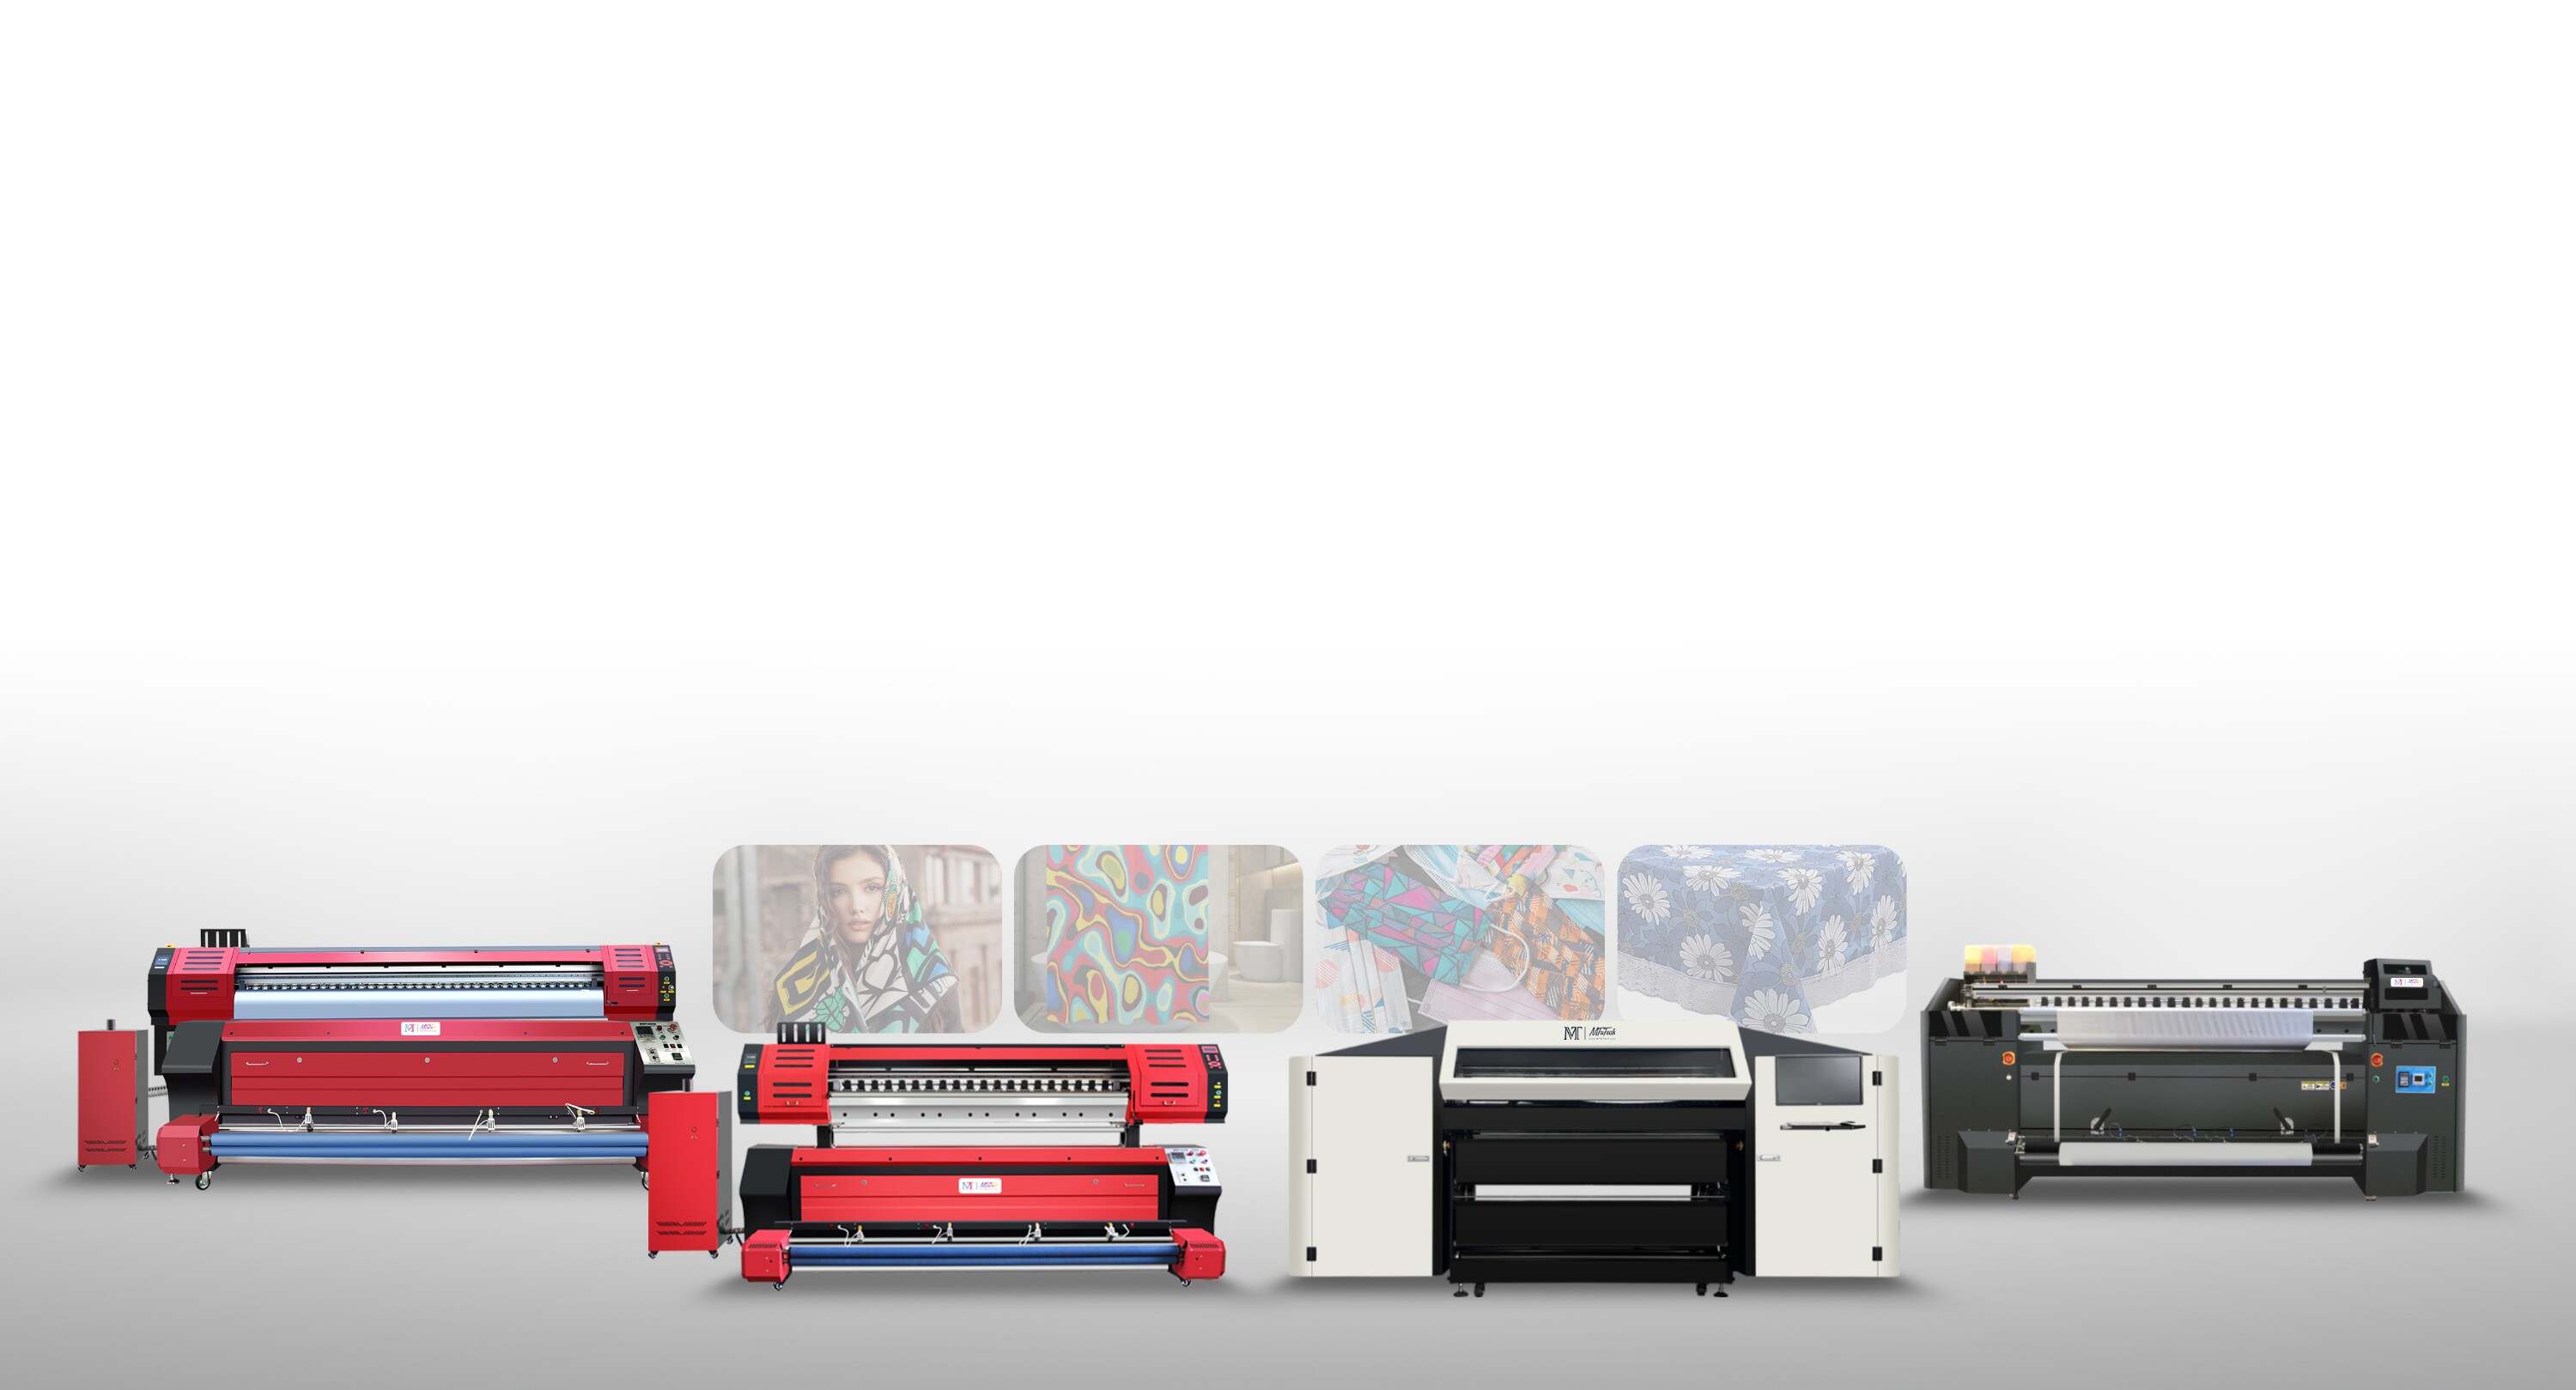 Direct To Fabric Printer MT-TXI3200Plus - Mtutech